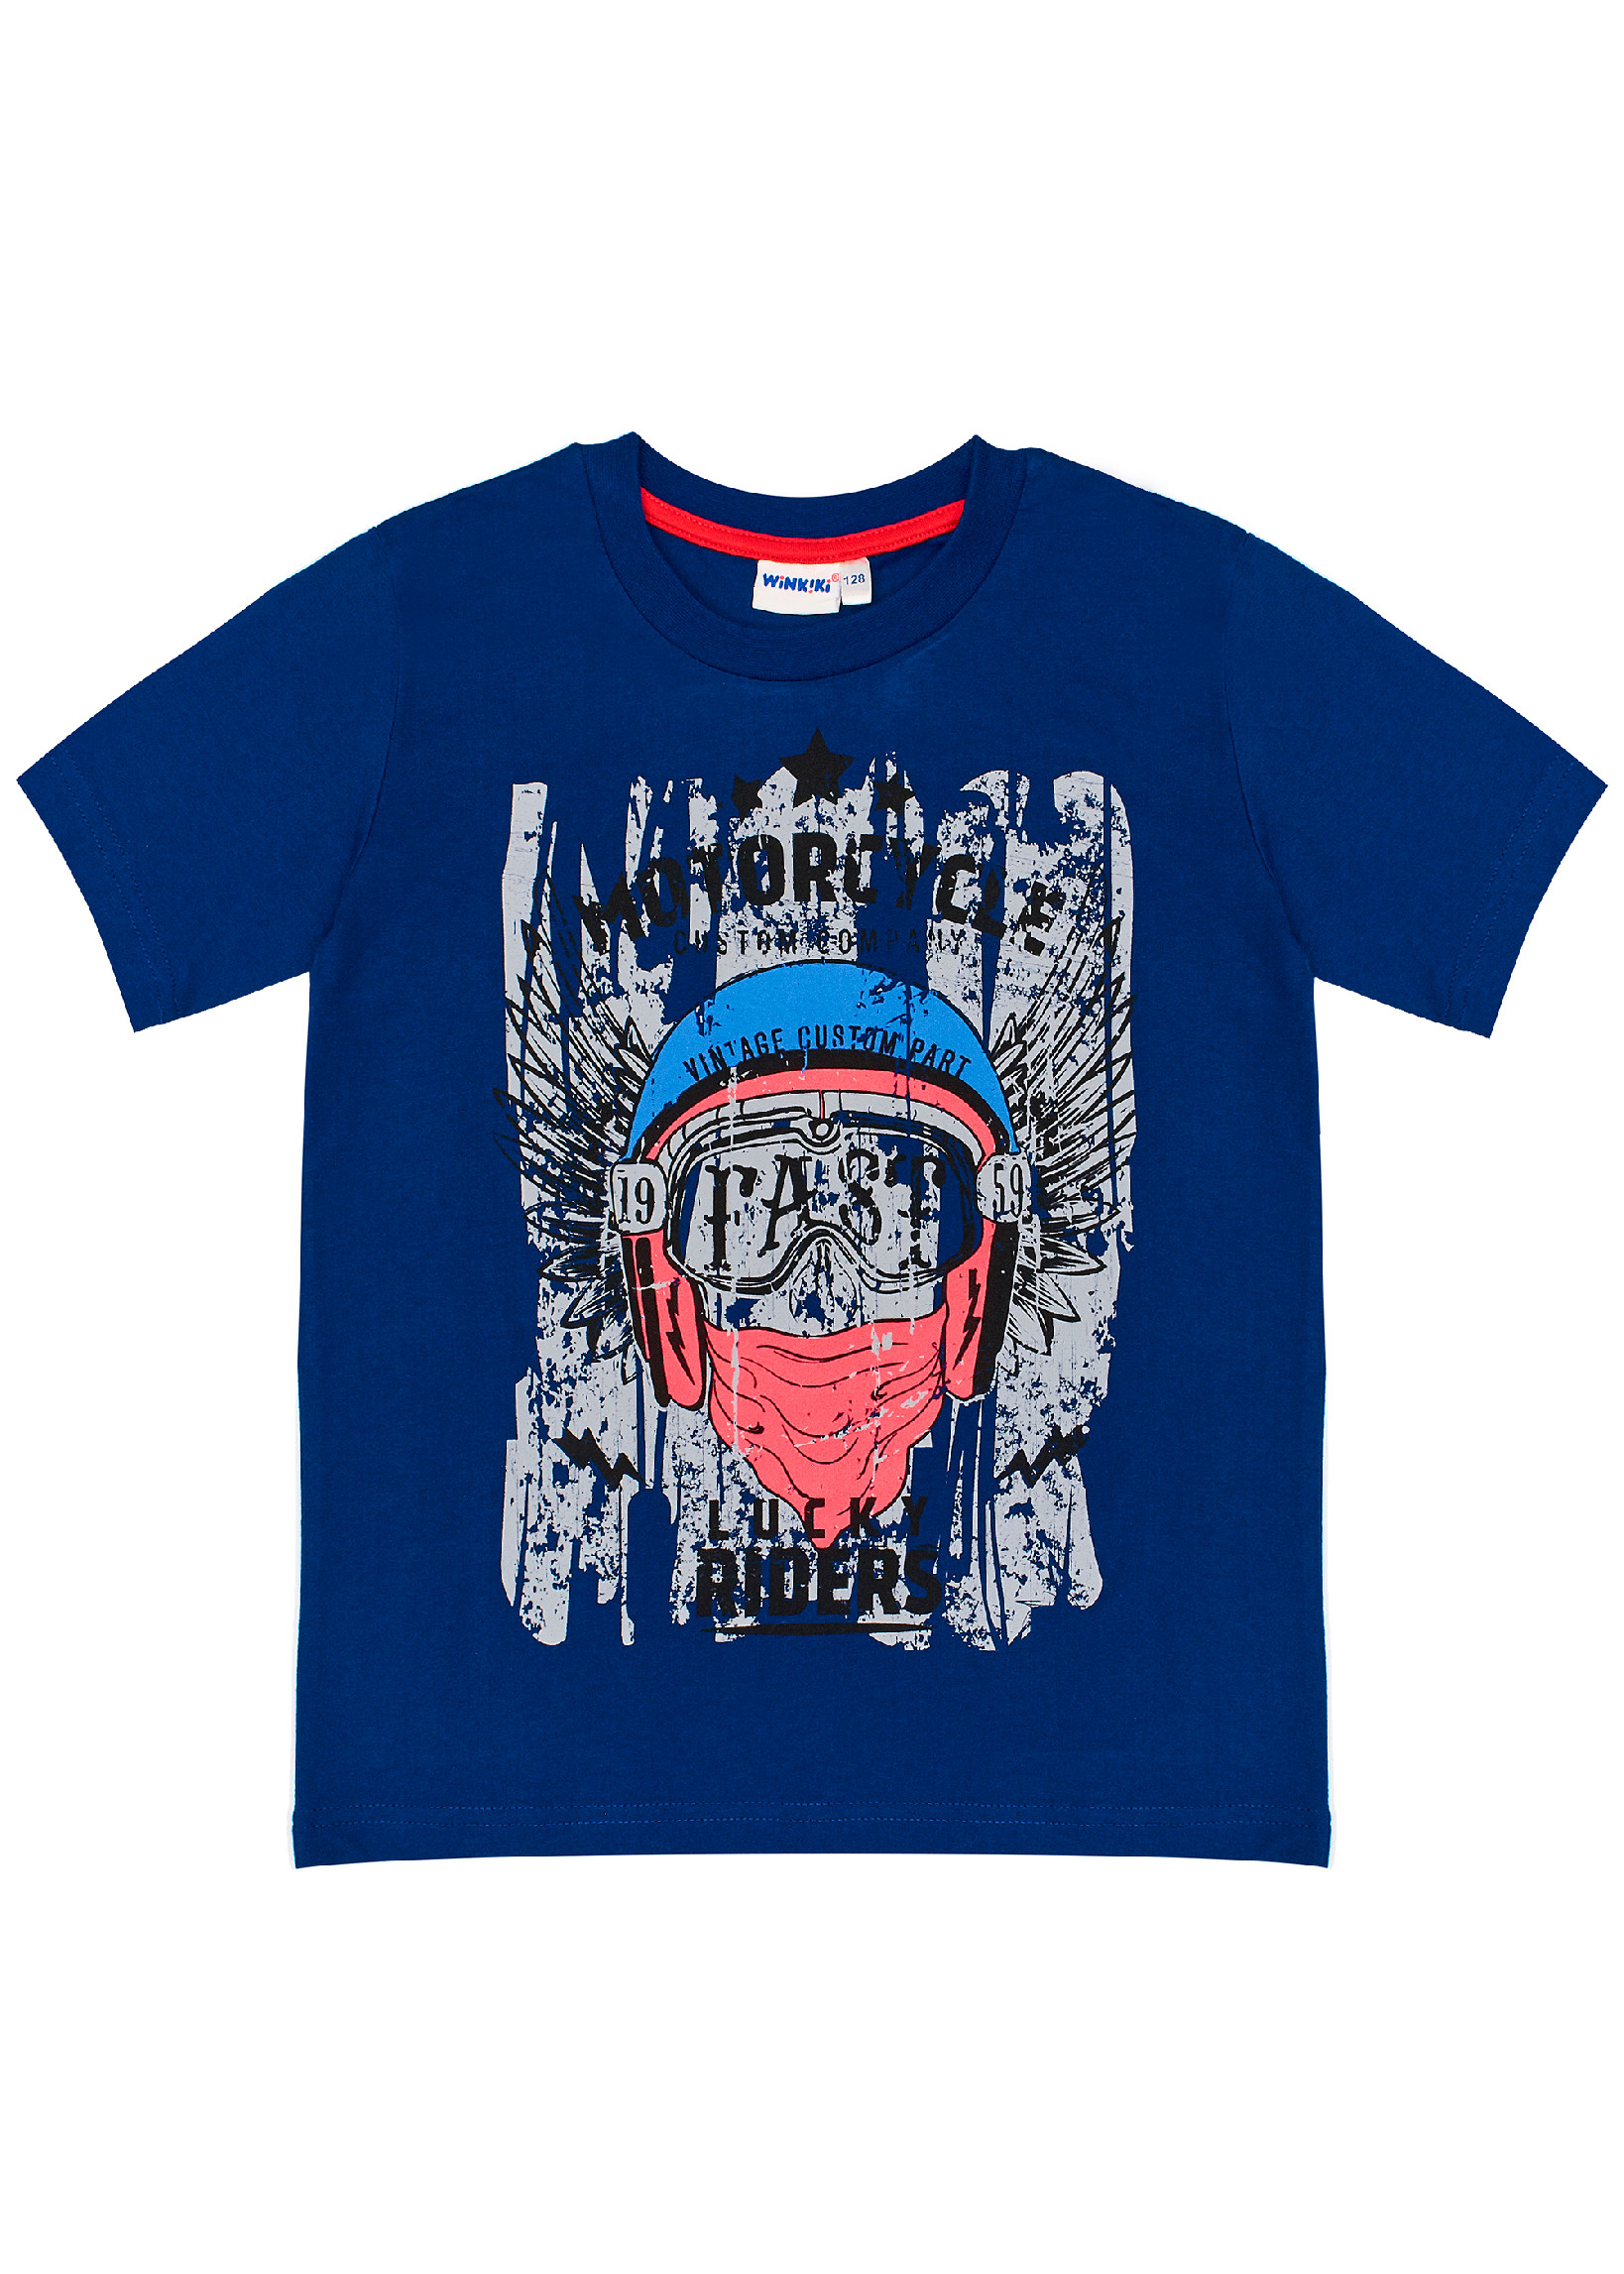 Chlapecké triko - Winkiki WJB 91380, tmavě modrá Barva: Modrá, Velikost: 146